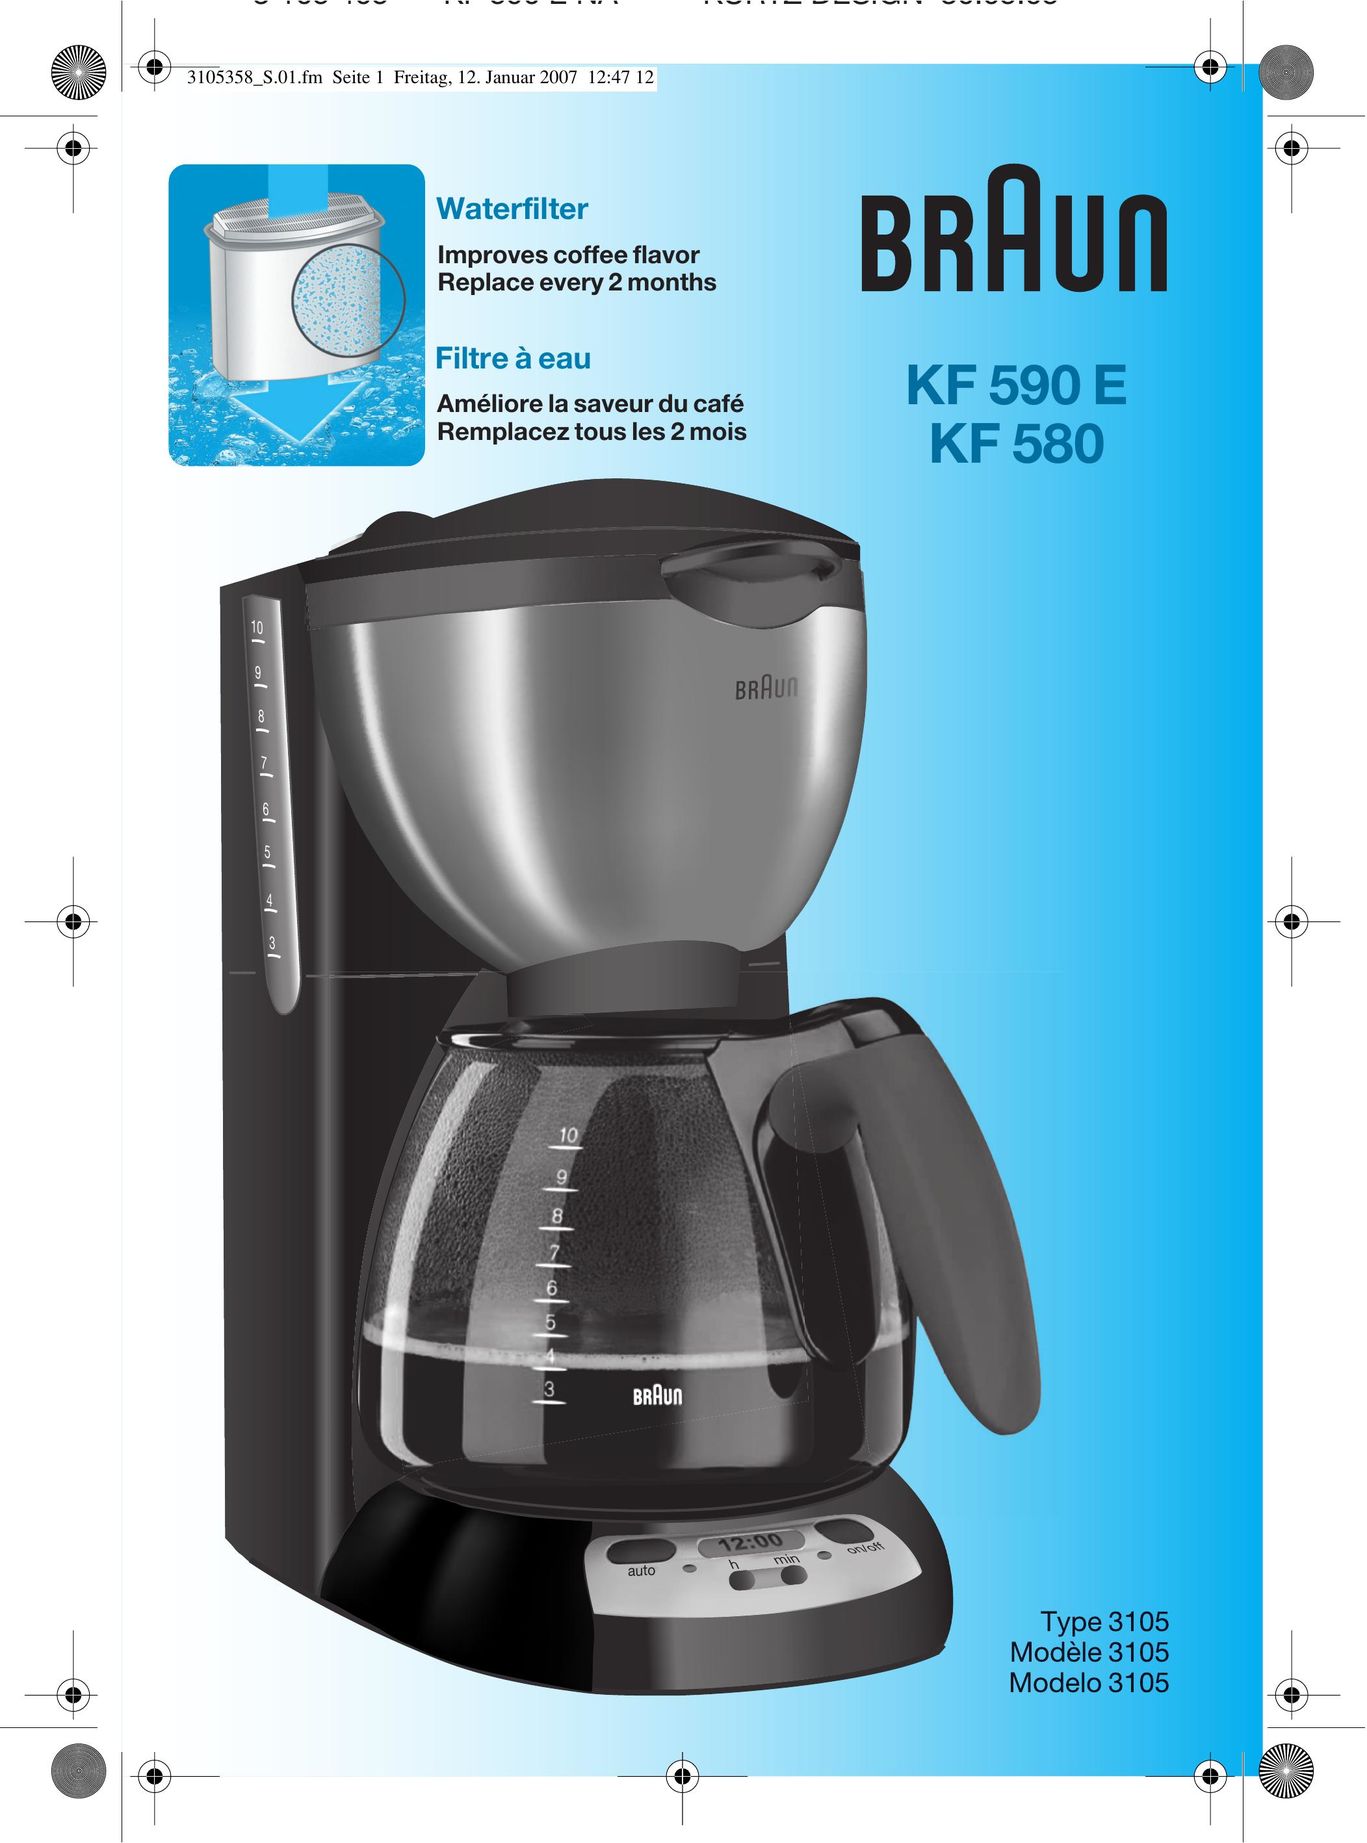 Braun KF580 Coffeemaker User Manual